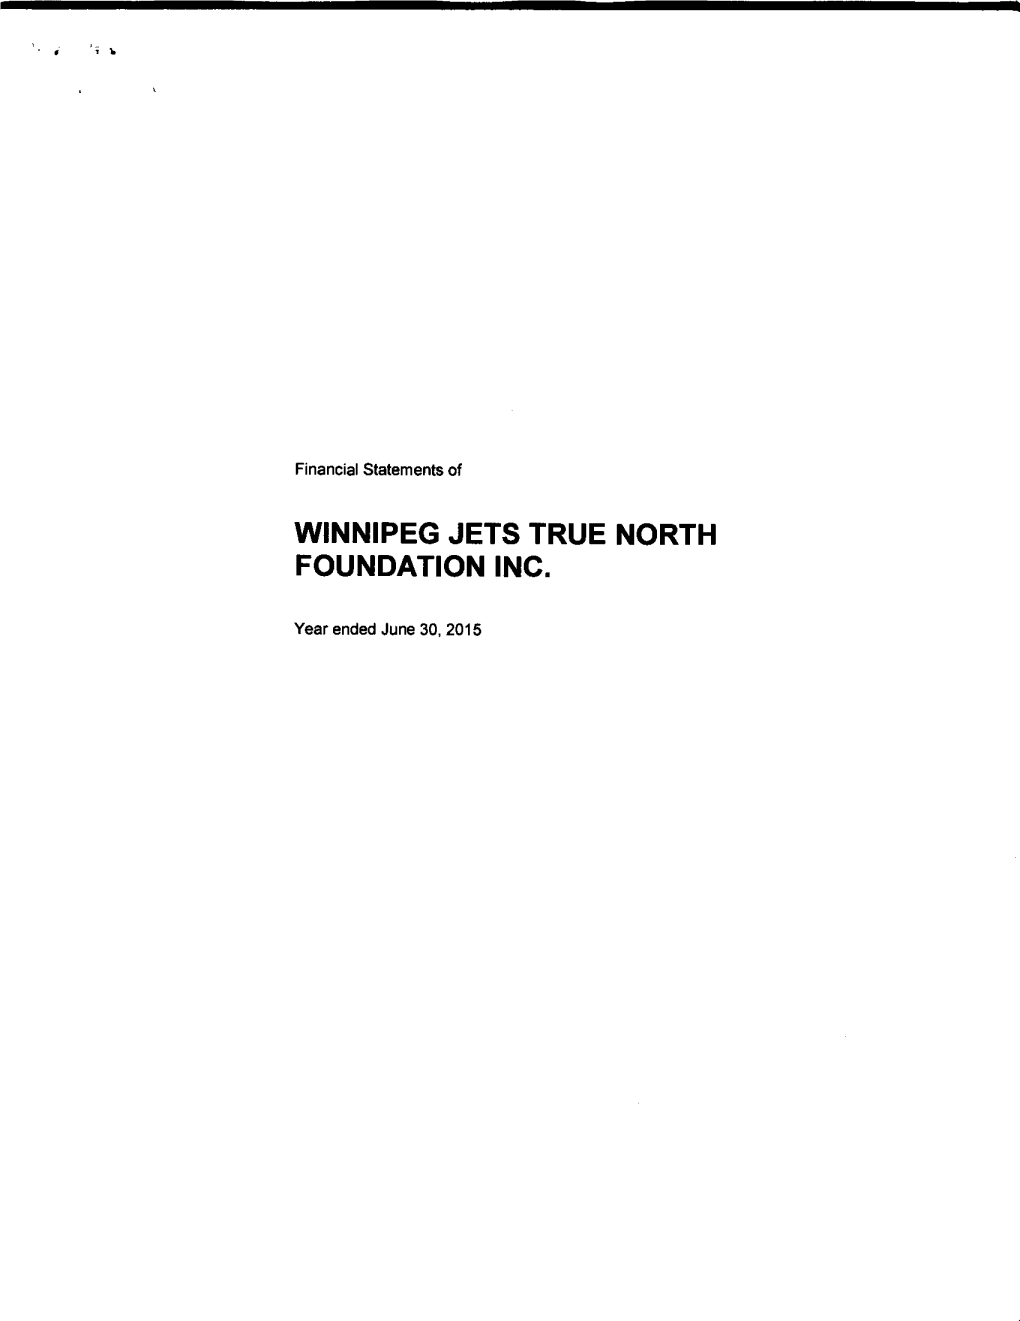 Winnipeg Jets True North Foundation Inc